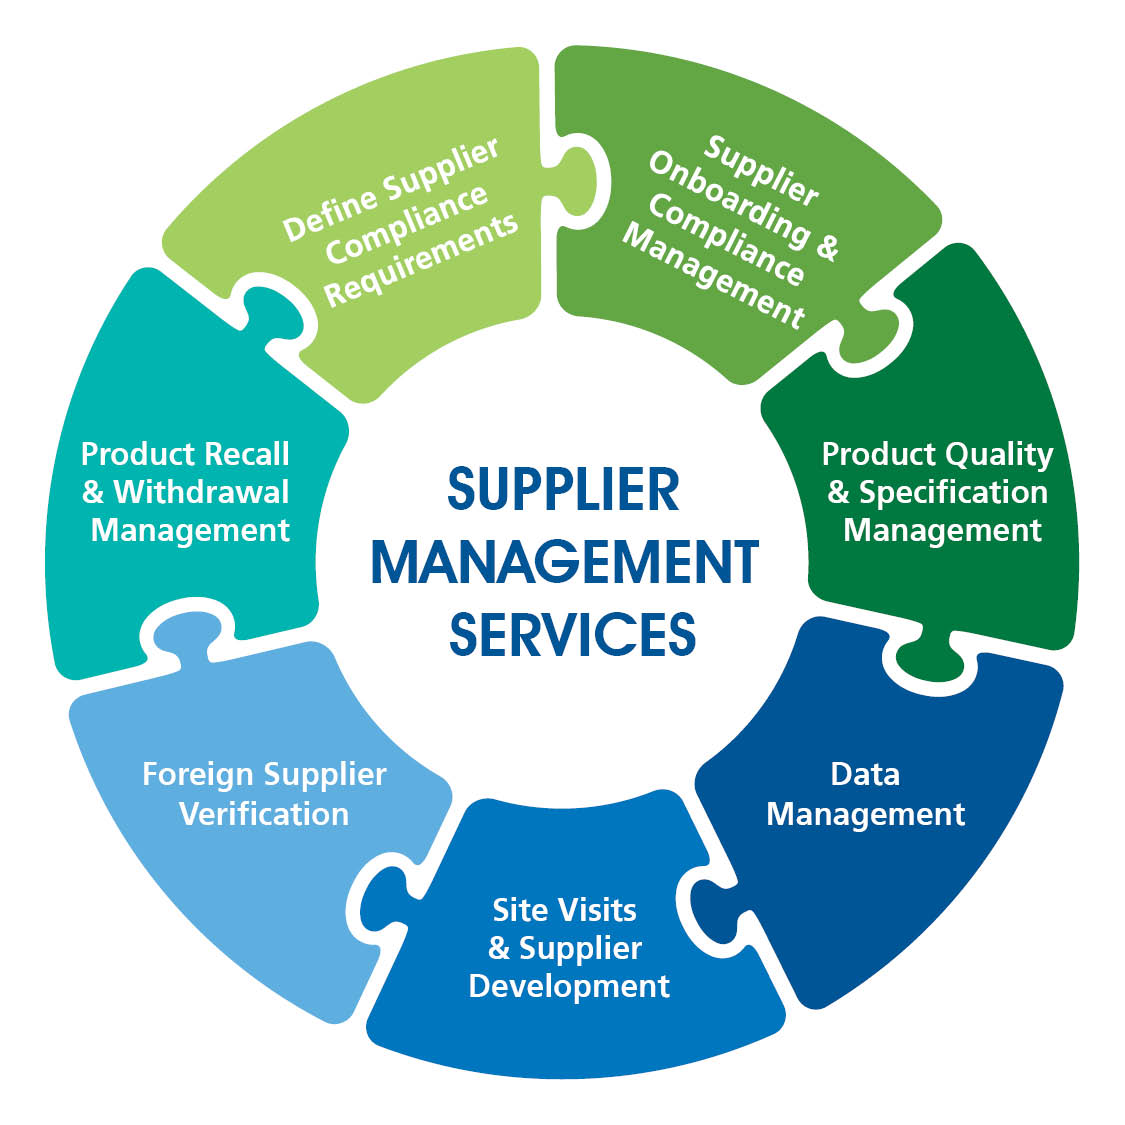 Supplier management services